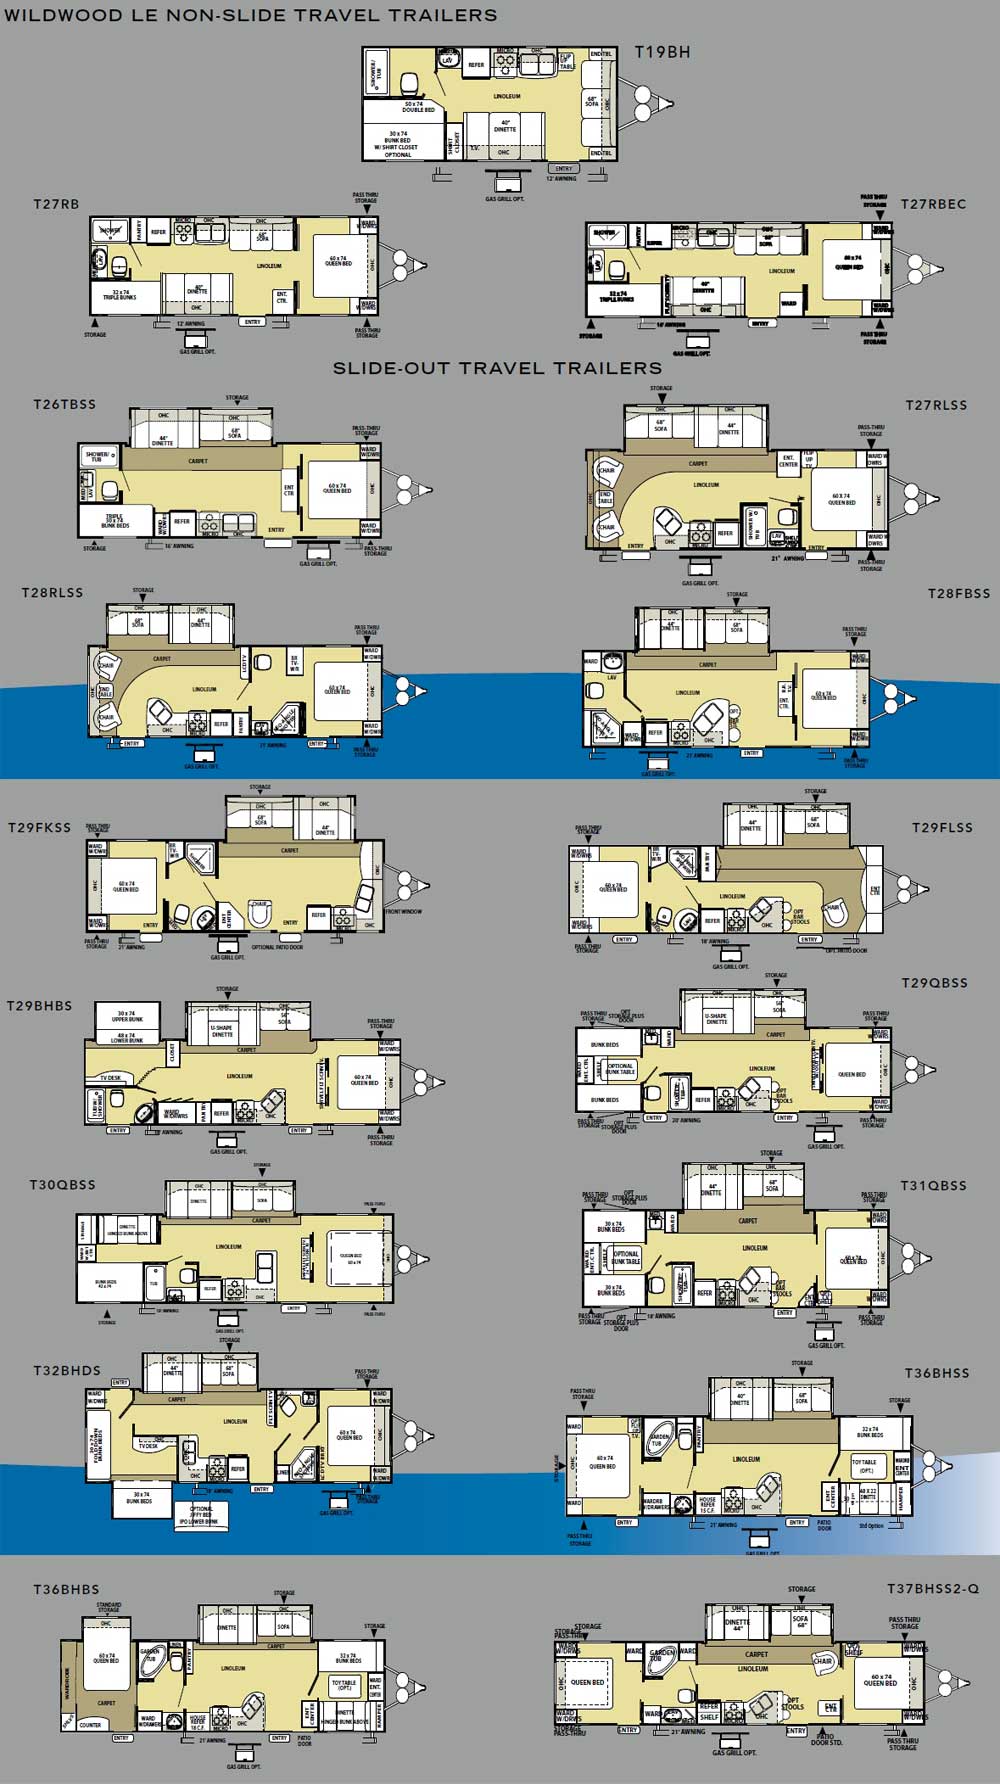 Forest River Wildwood travel trailer floorplans